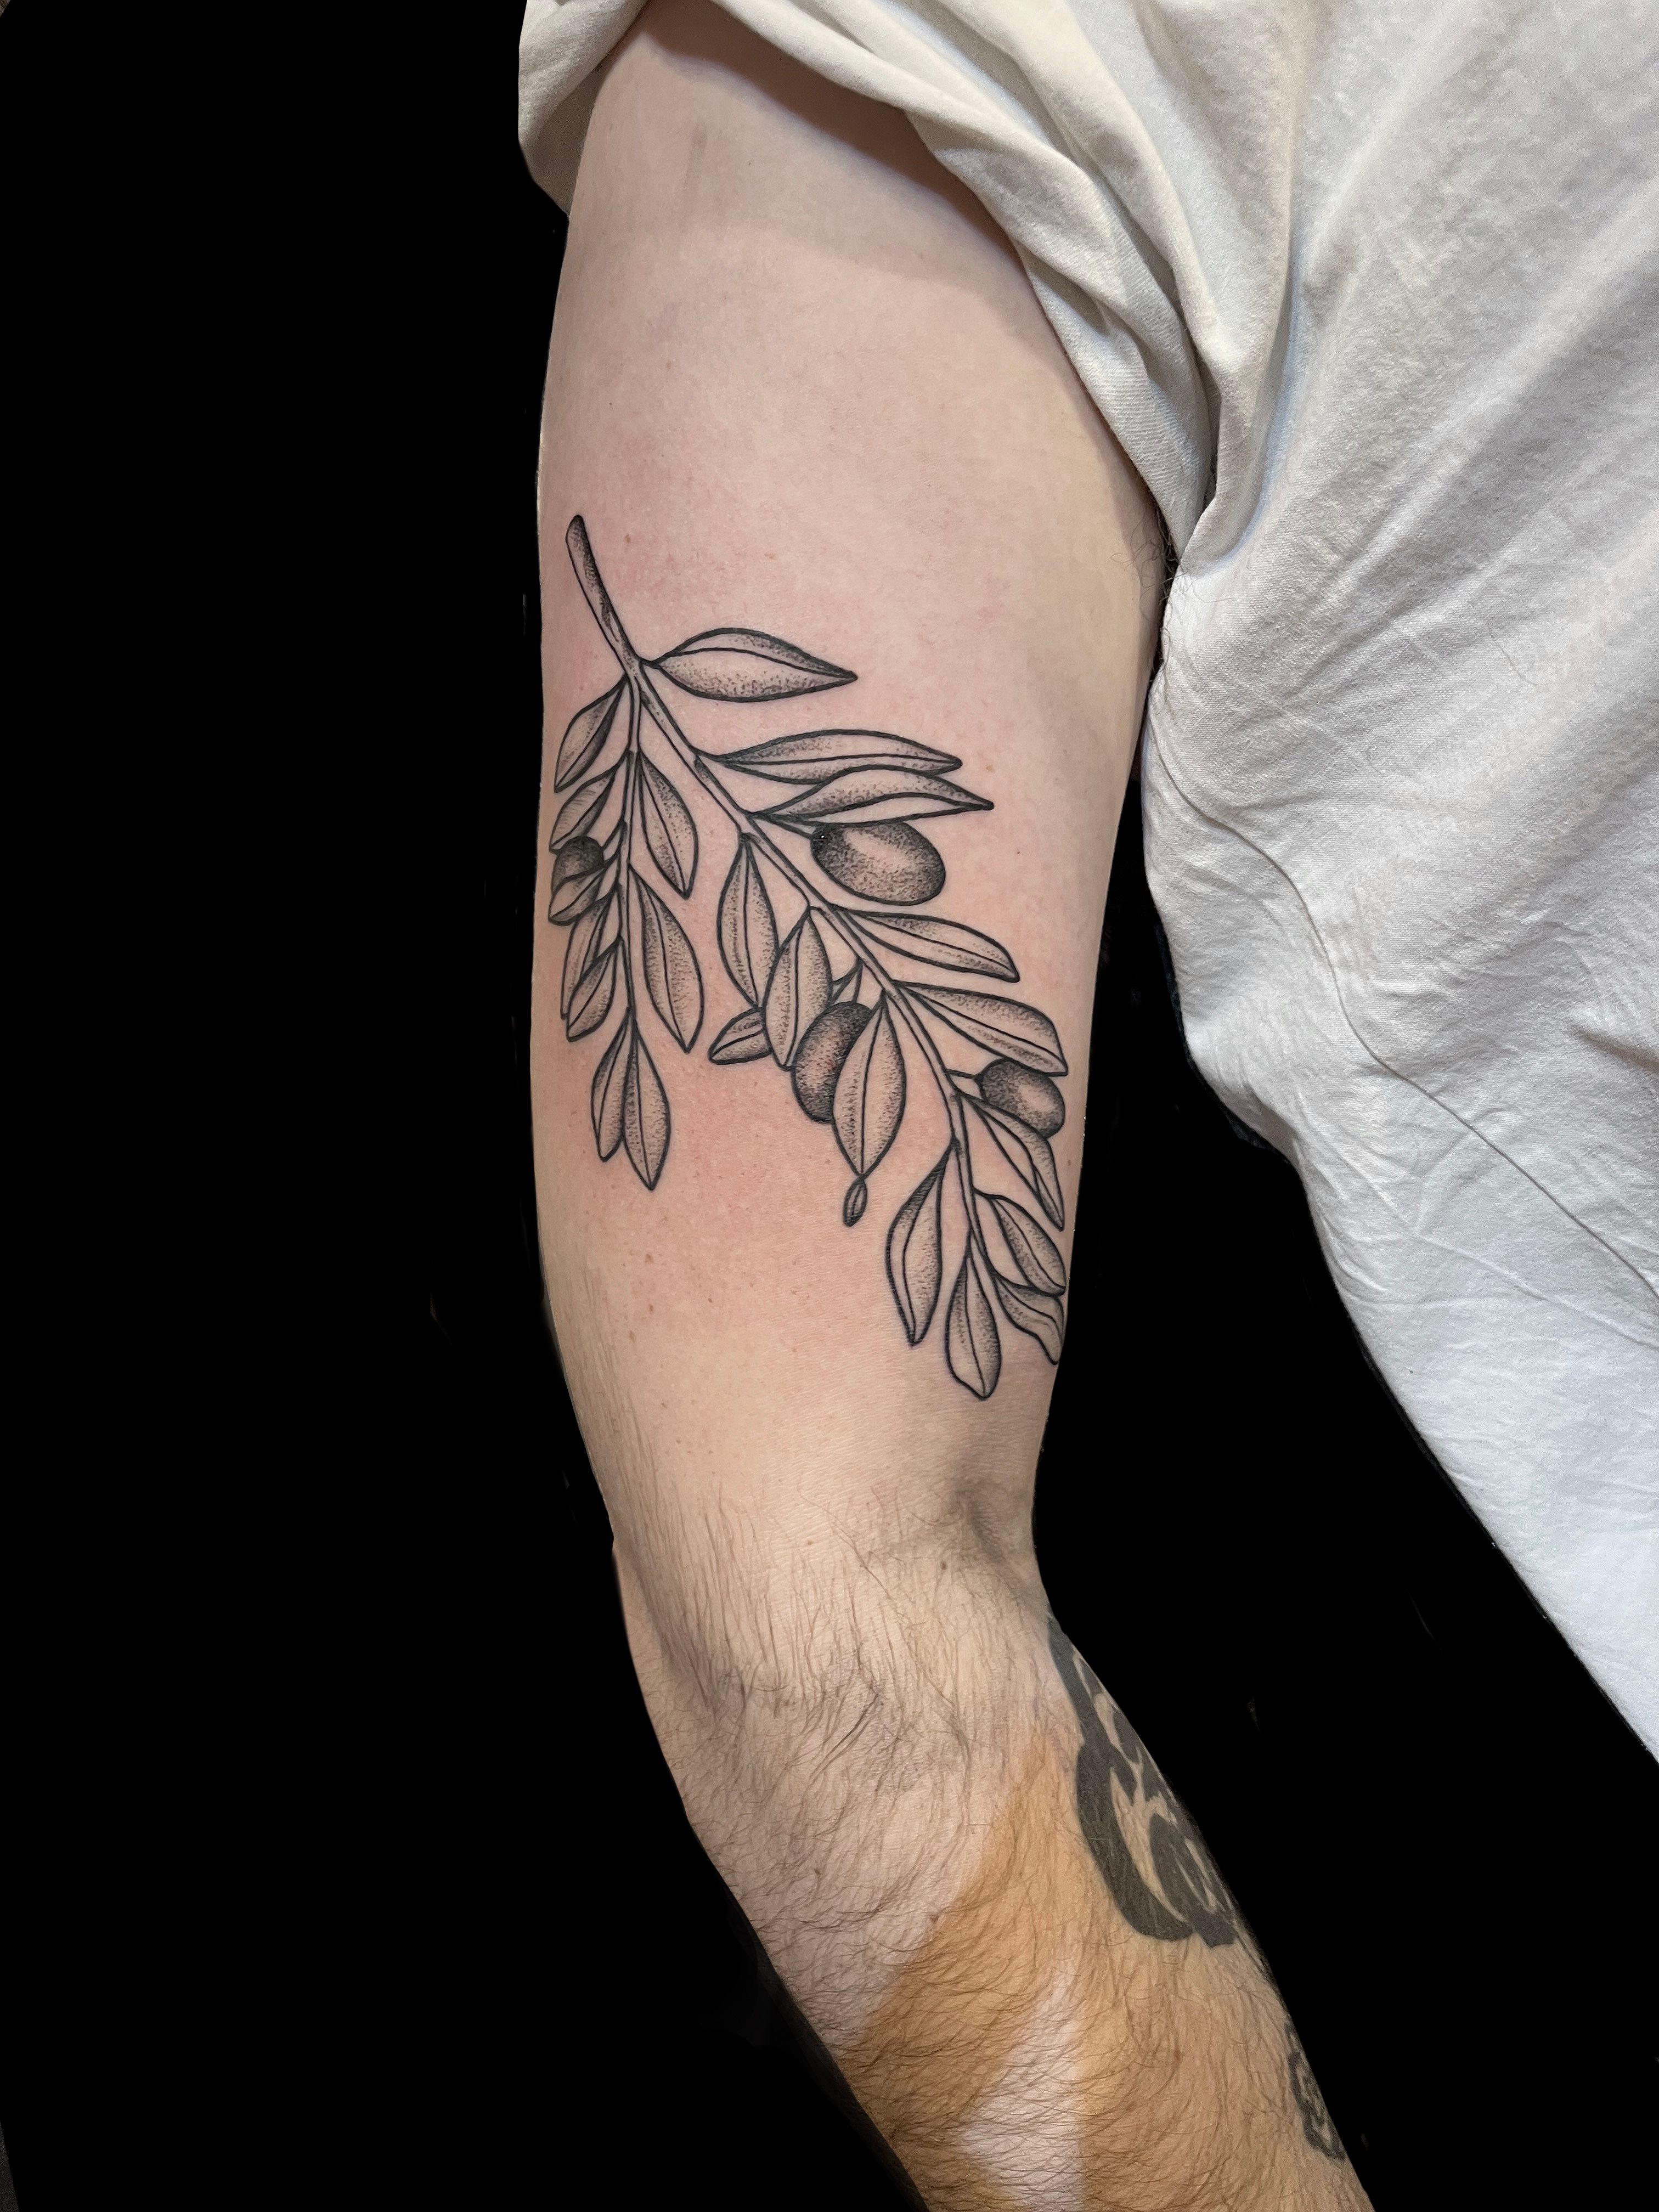 Olive branch tattoo. by ovumink on DeviantArt